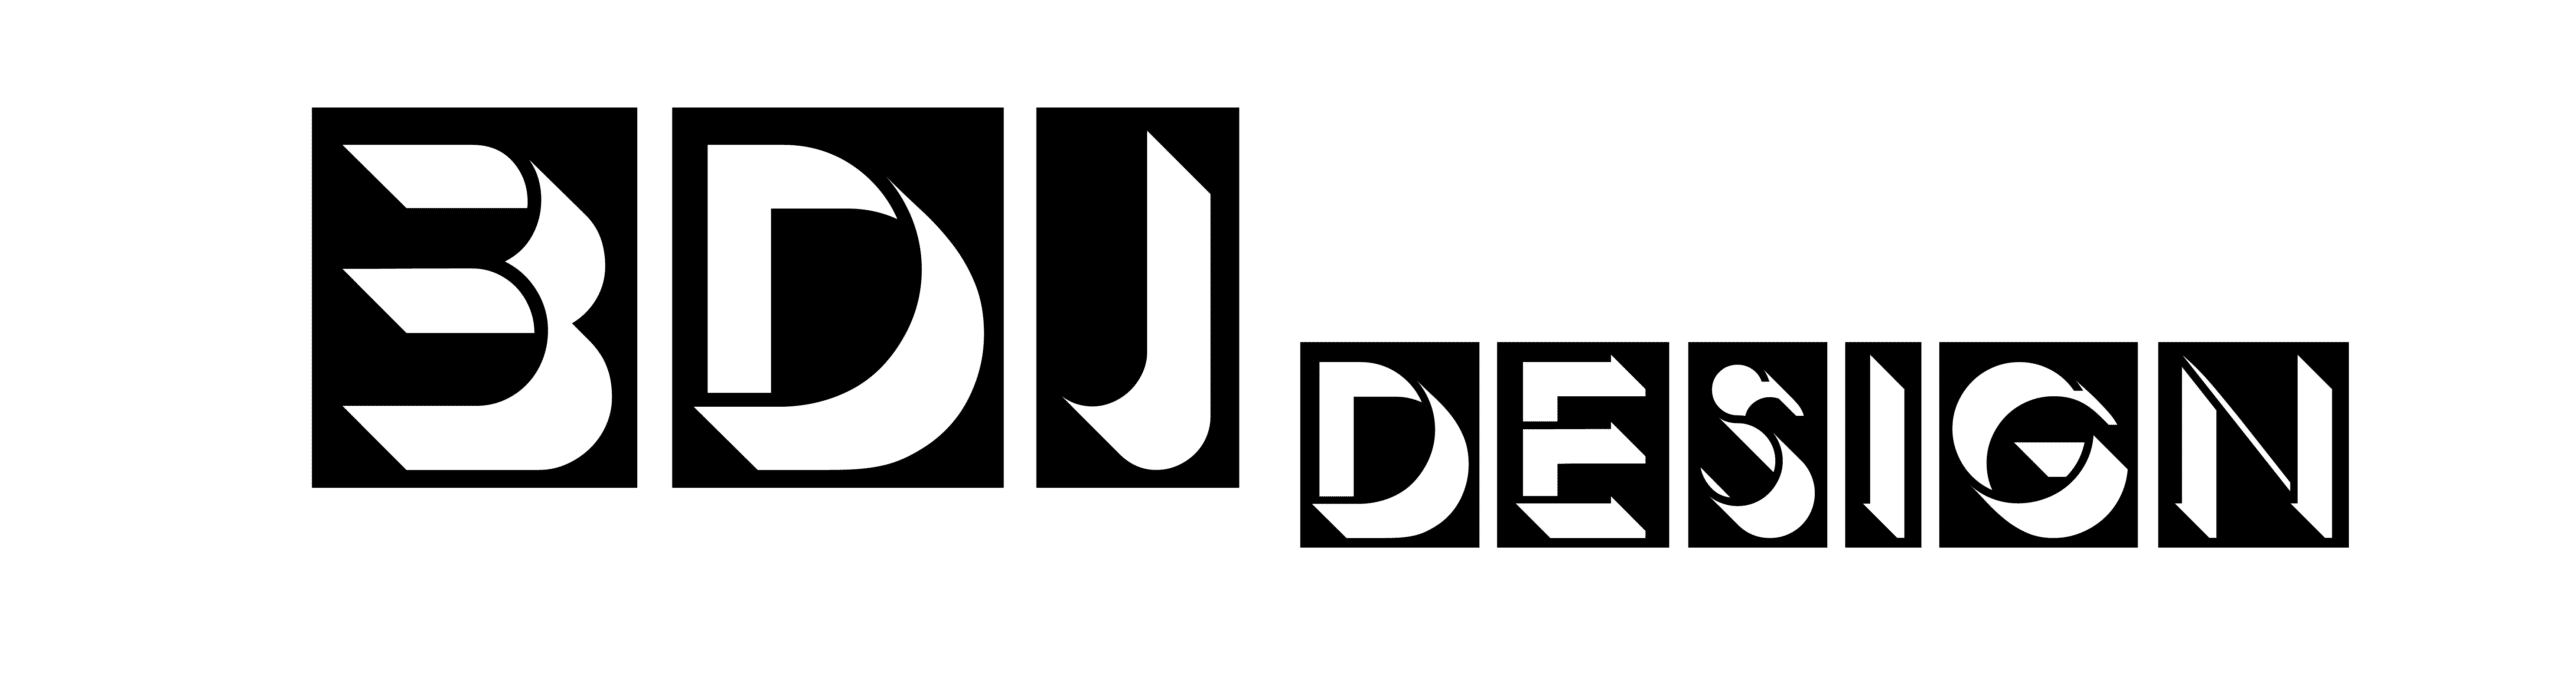 BDJ Design - logo noir